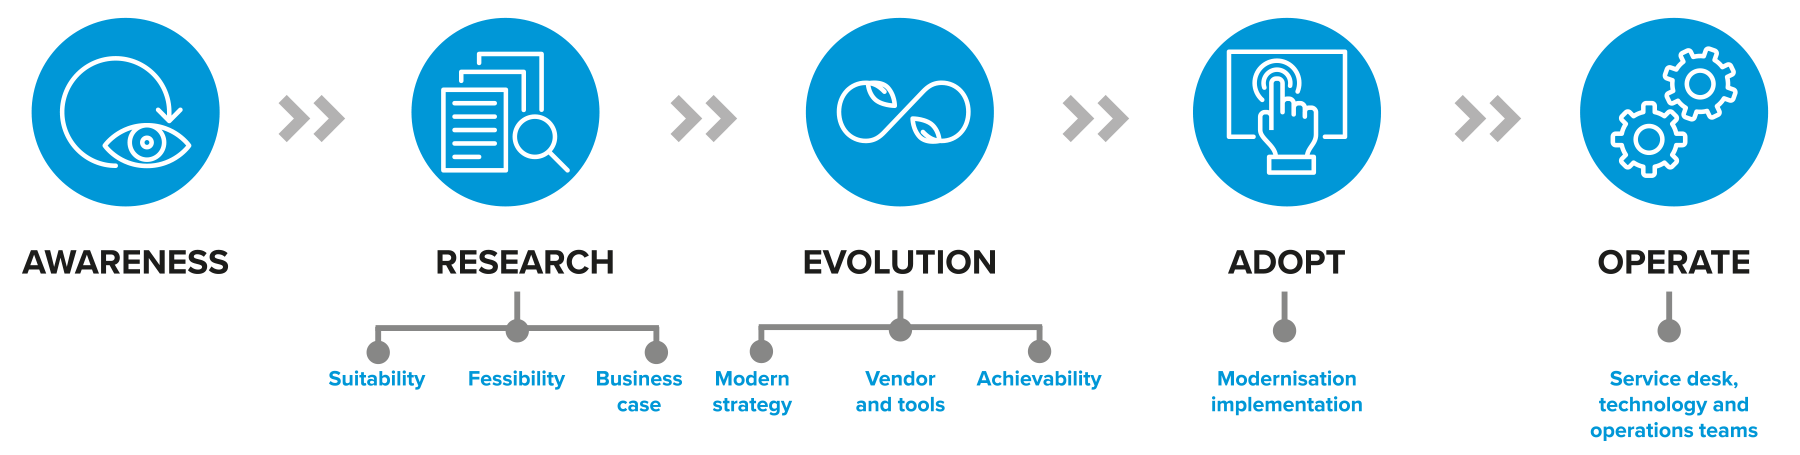 Application and mainframe modernisation: Our Strategic Evolution Criteria